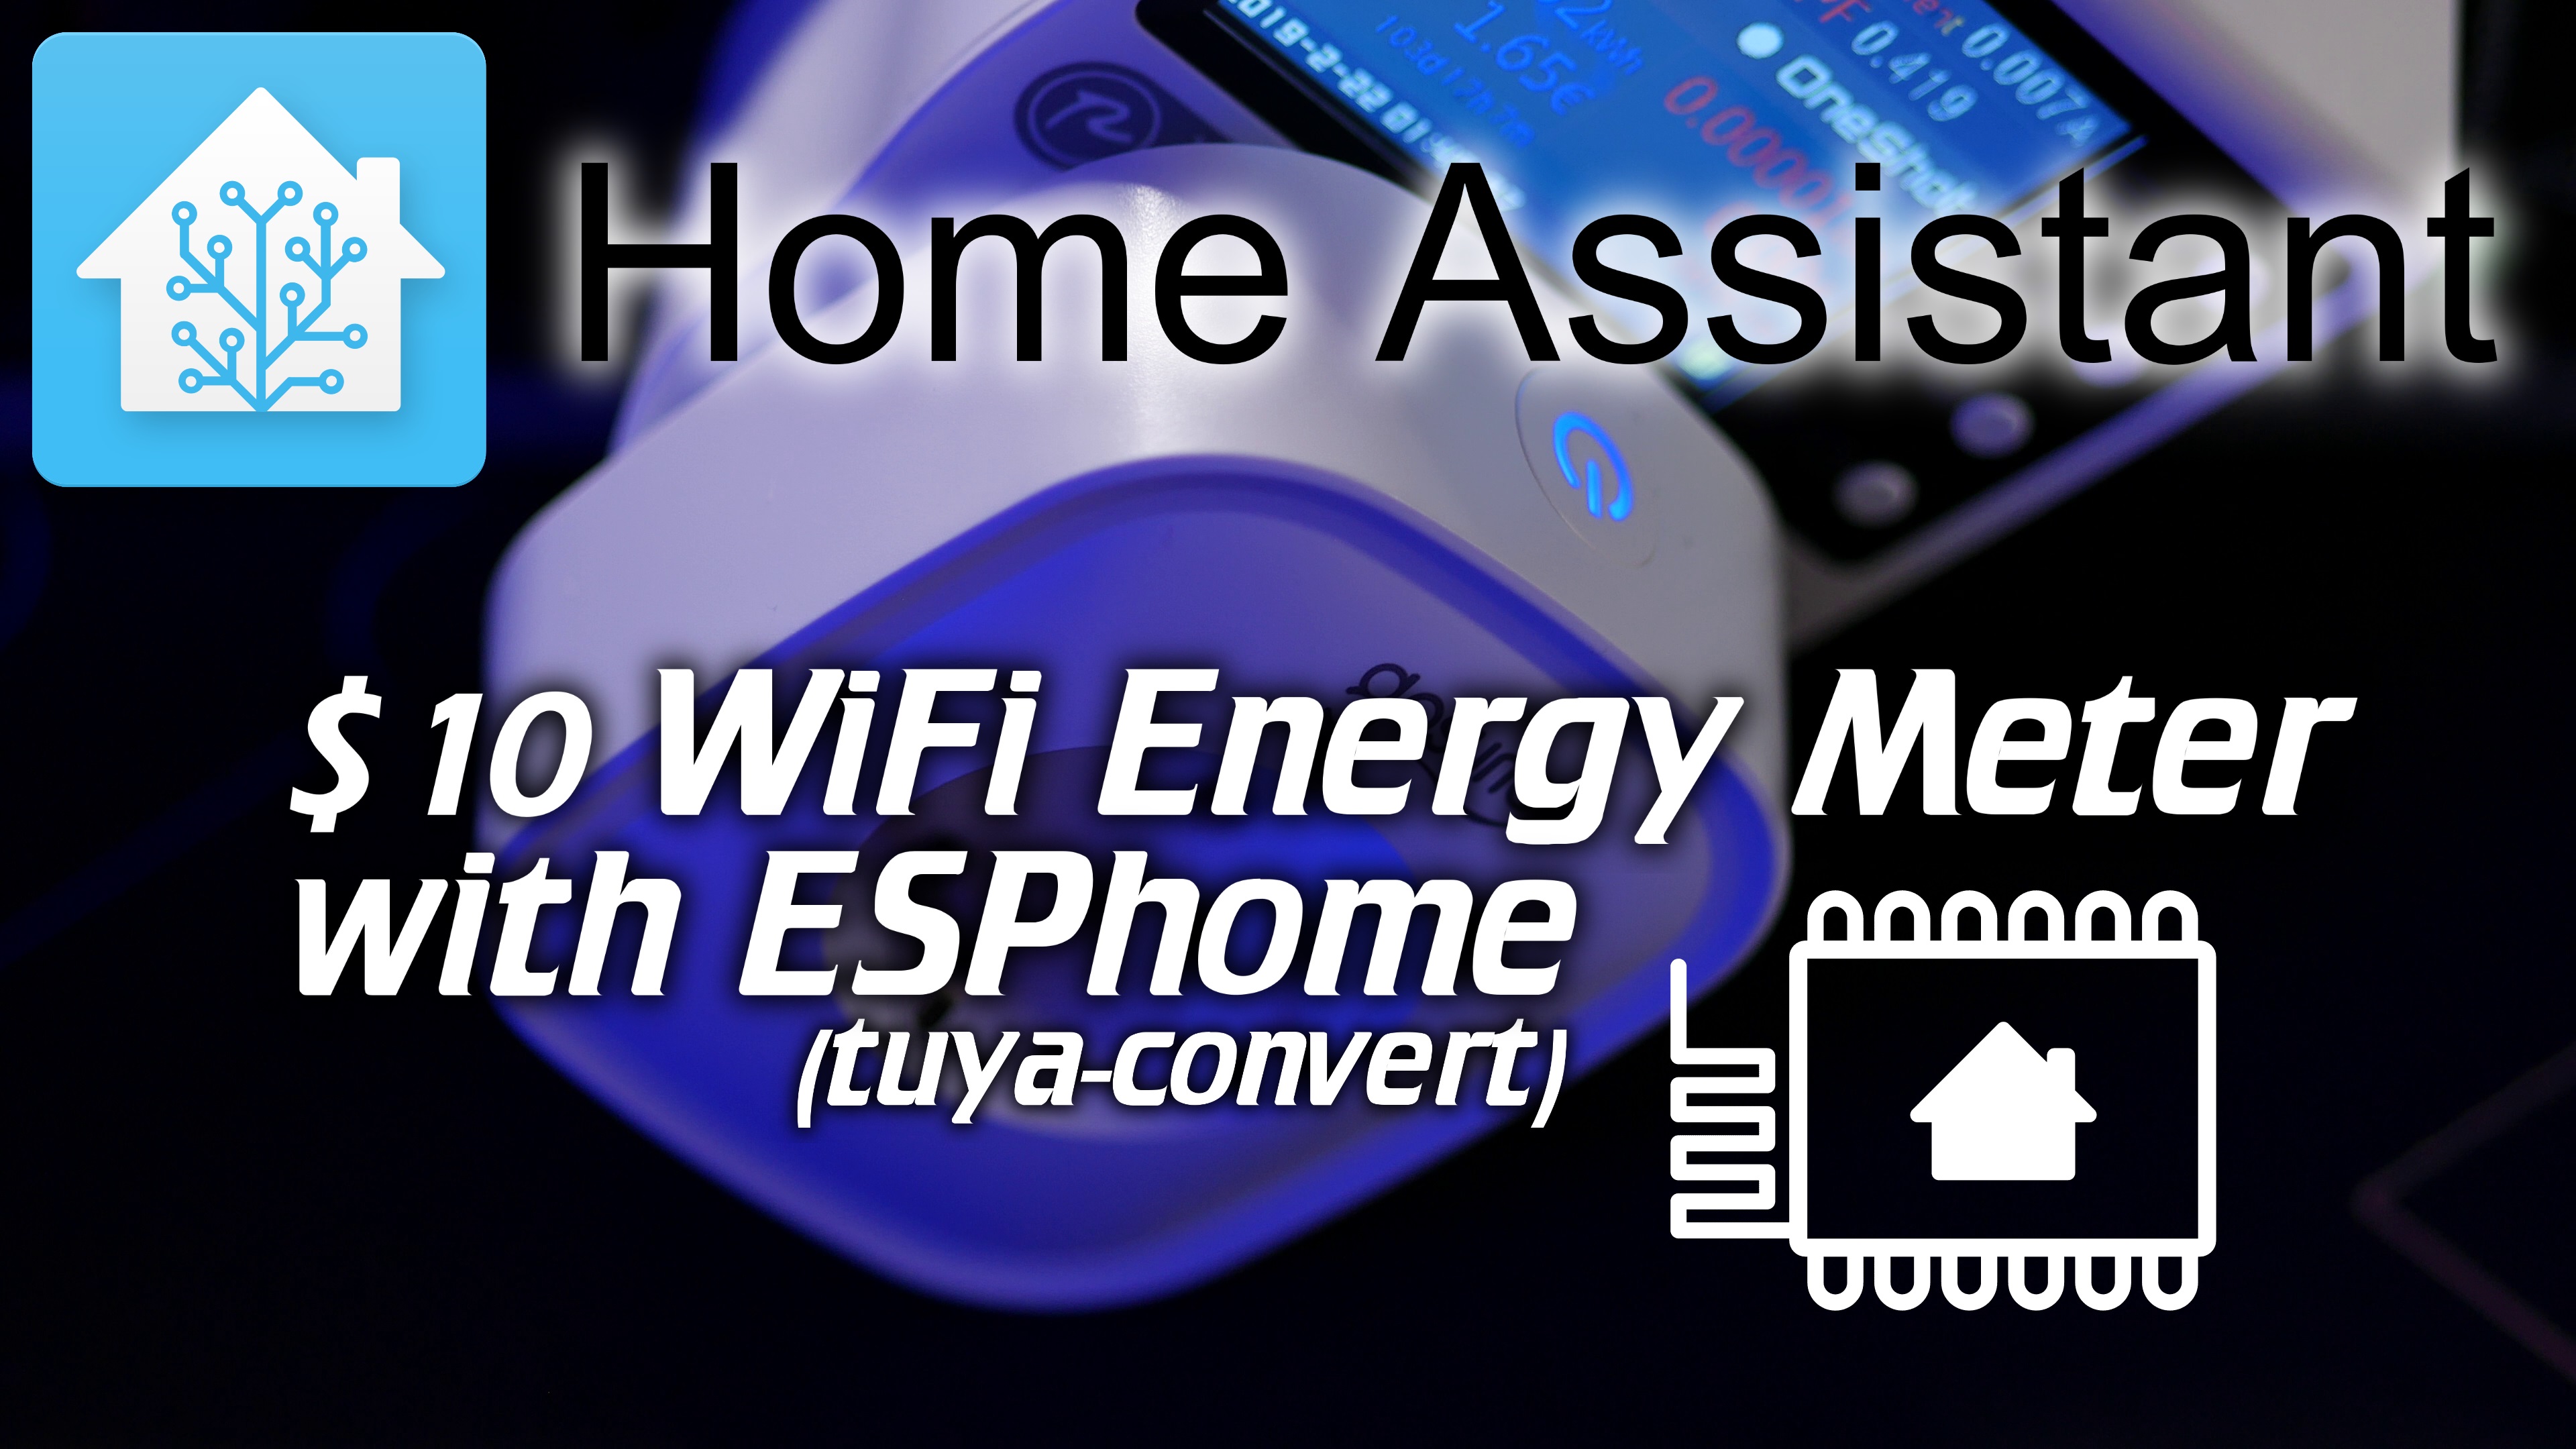 Home Assistant: Cheap Multi-Room Temperature & Humidity sensors